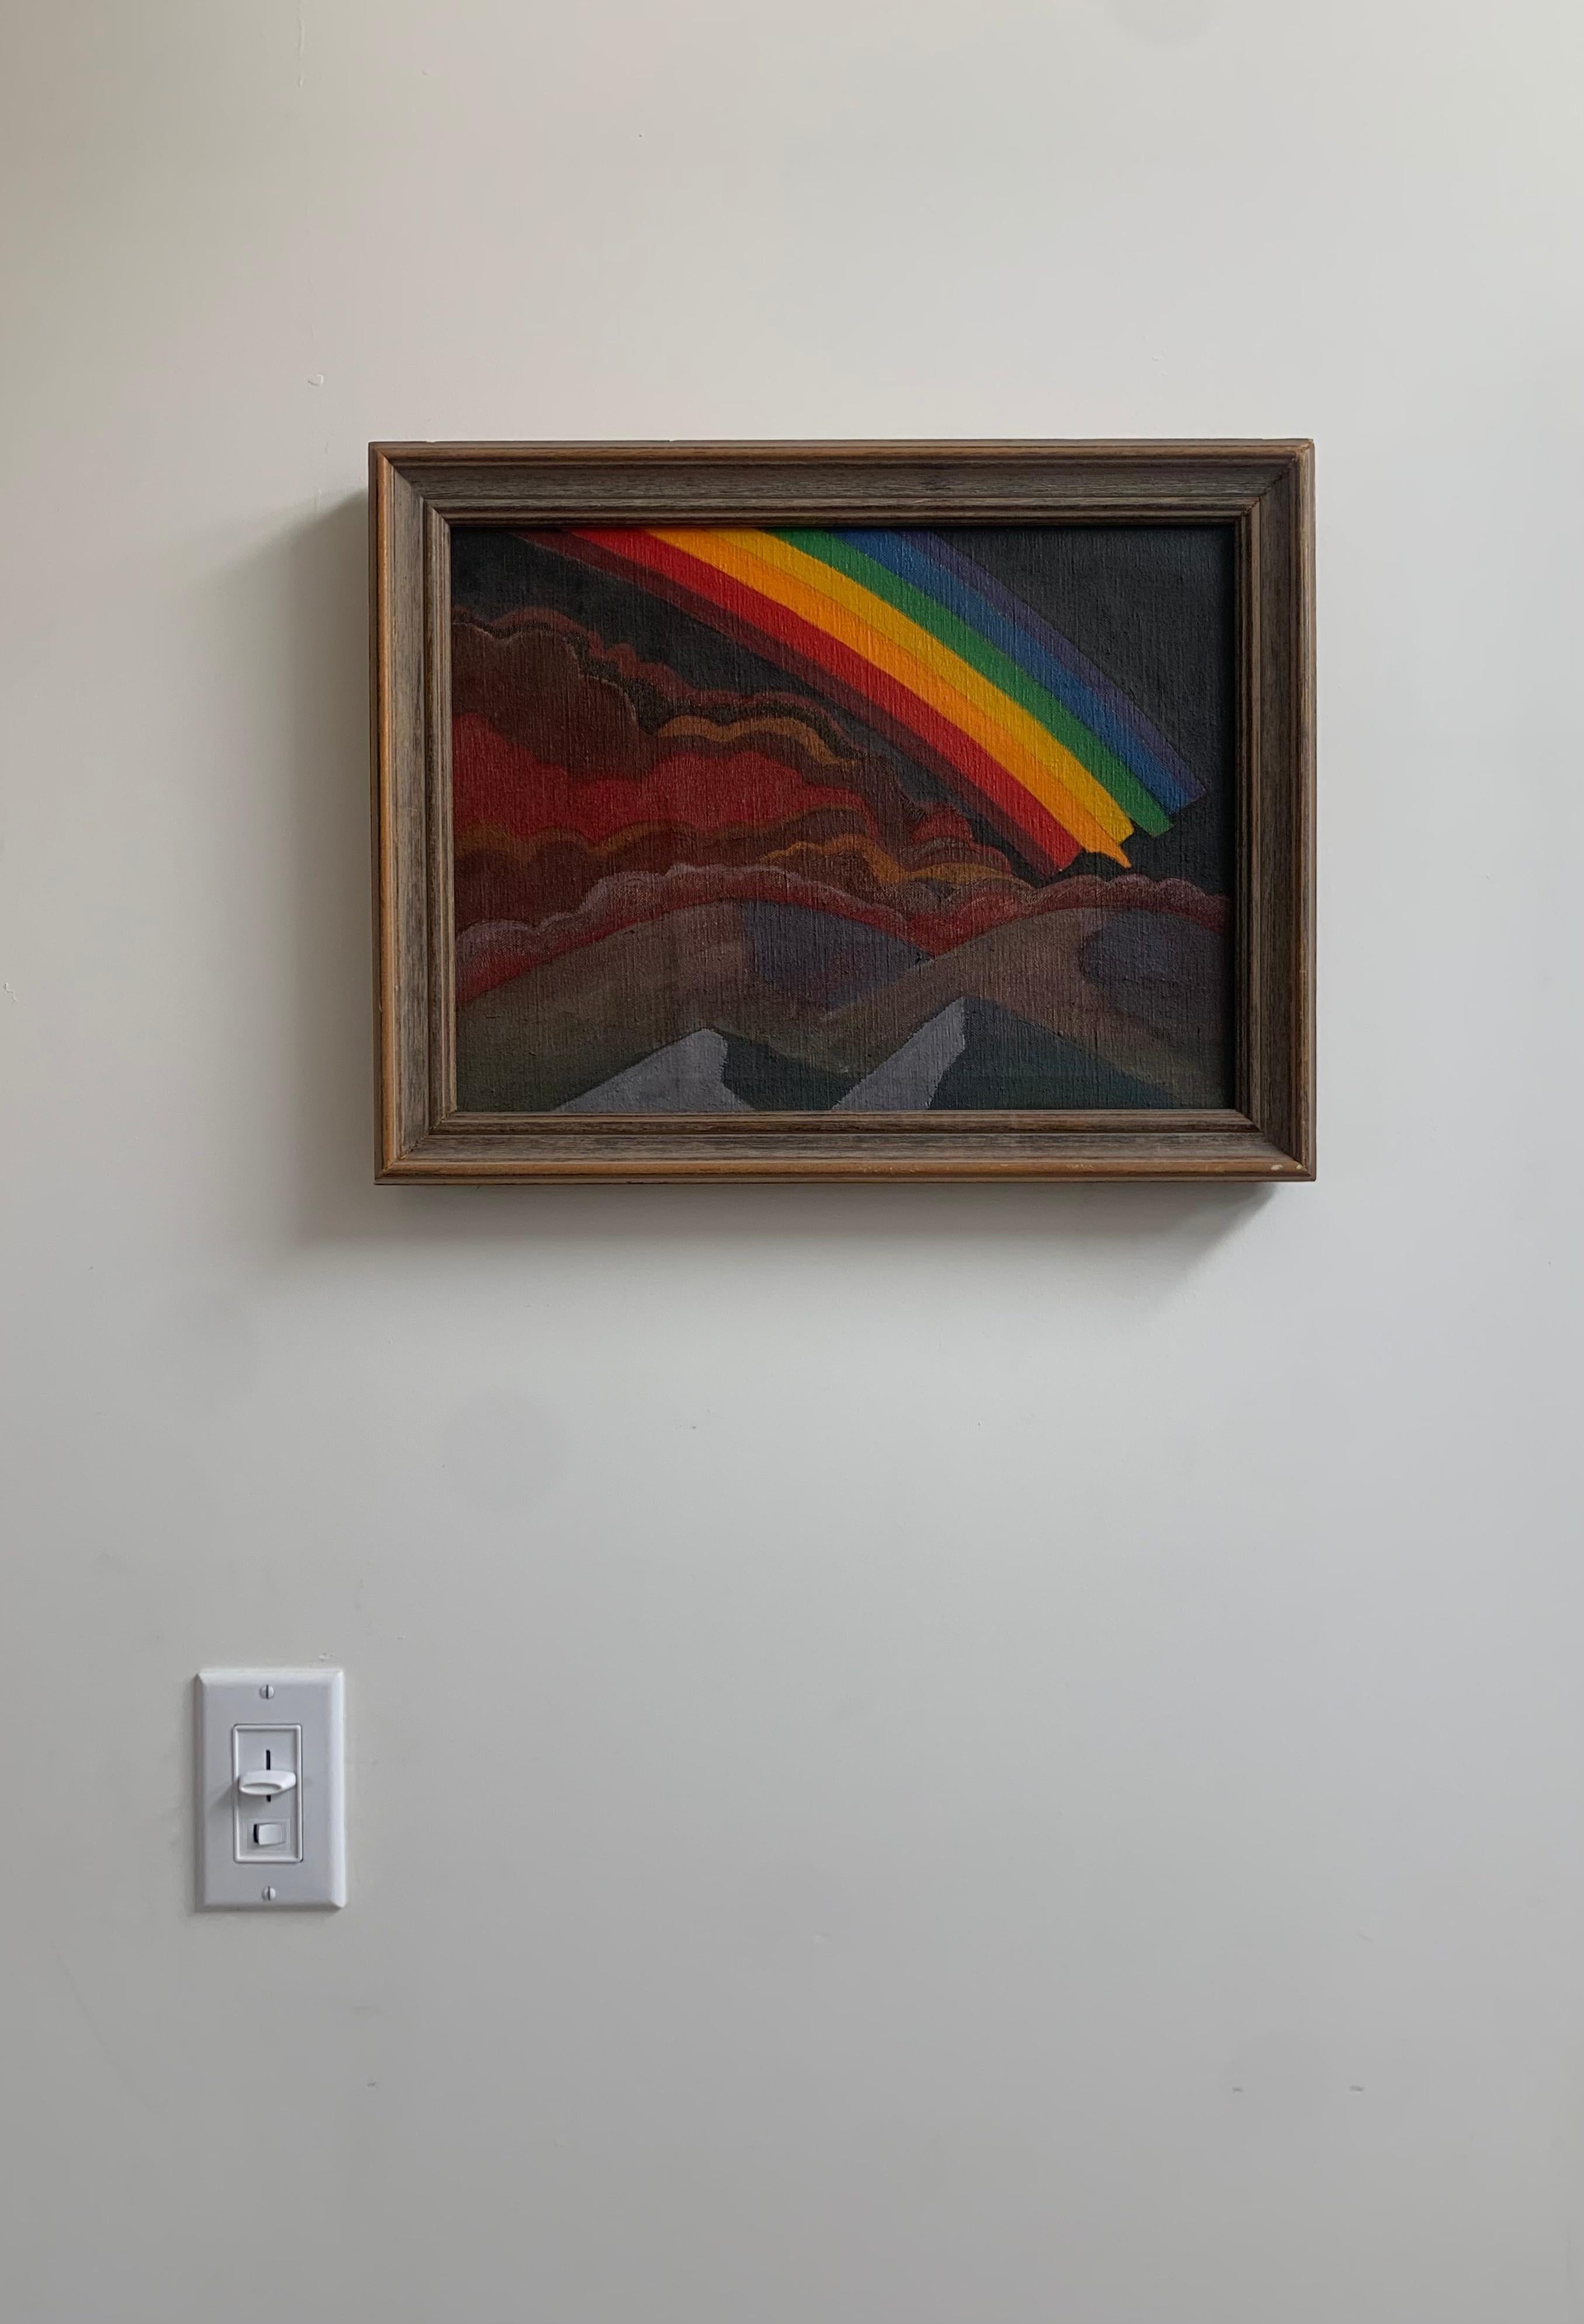 Ed Beardsley Painting “Midnight Rainbow”, 1980, Signed and Framed 5